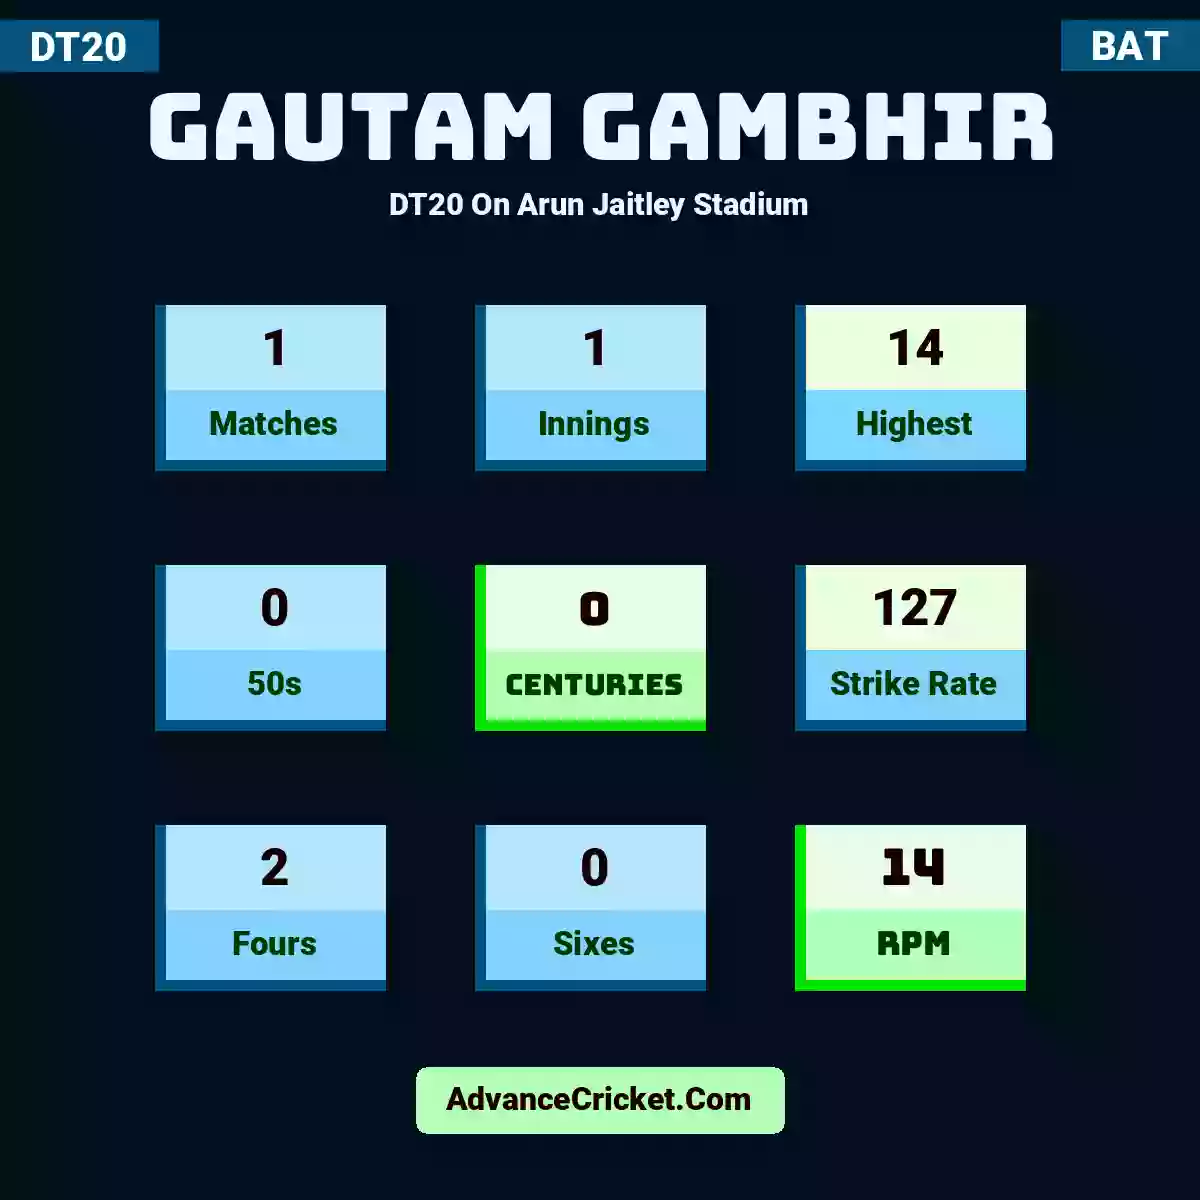 Gautam Gambhir DT20  On Arun Jaitley Stadium, Gautam Gambhir played 1 matches, scored 14 runs as highest, 0 half-centuries, and 0 centuries, with a strike rate of 127. G.Gambhir hit 2 fours and 0 sixes, with an RPM of 14.